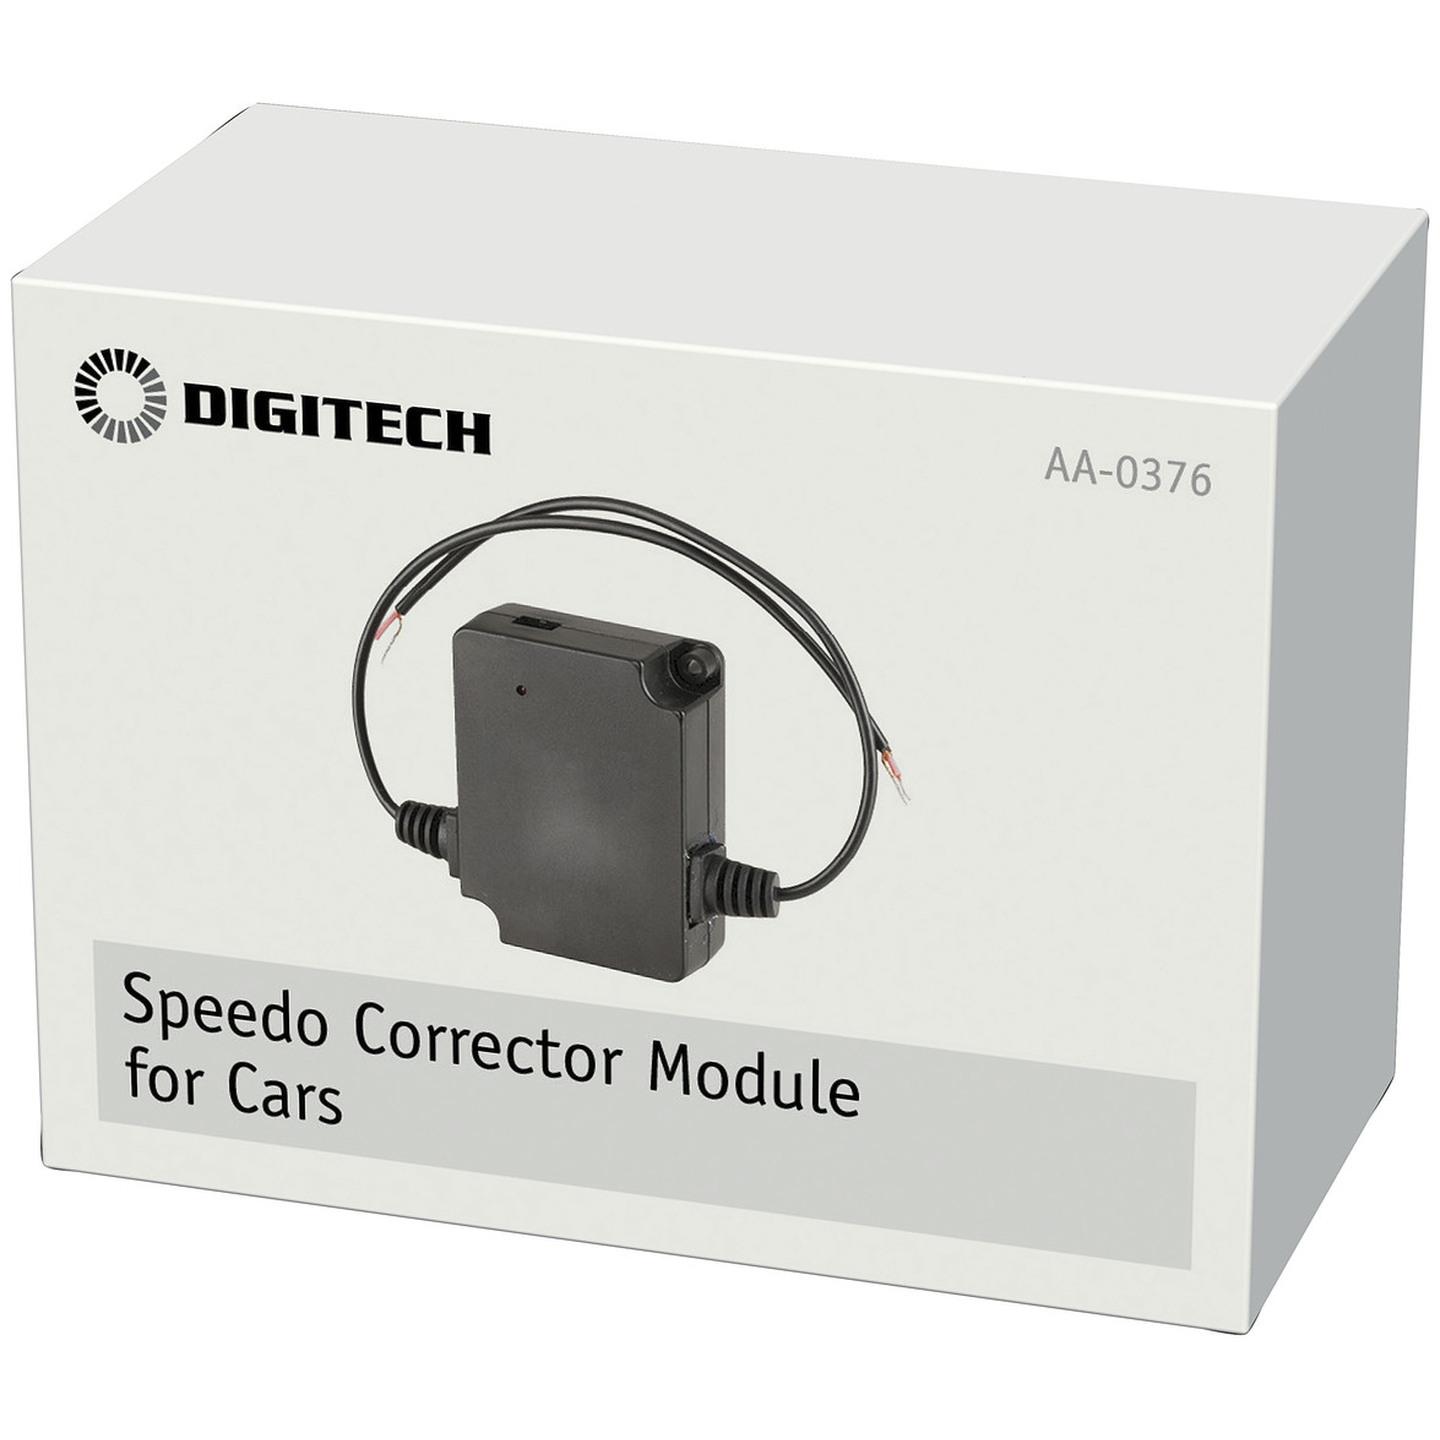 Speedo Corrector Module for Cars